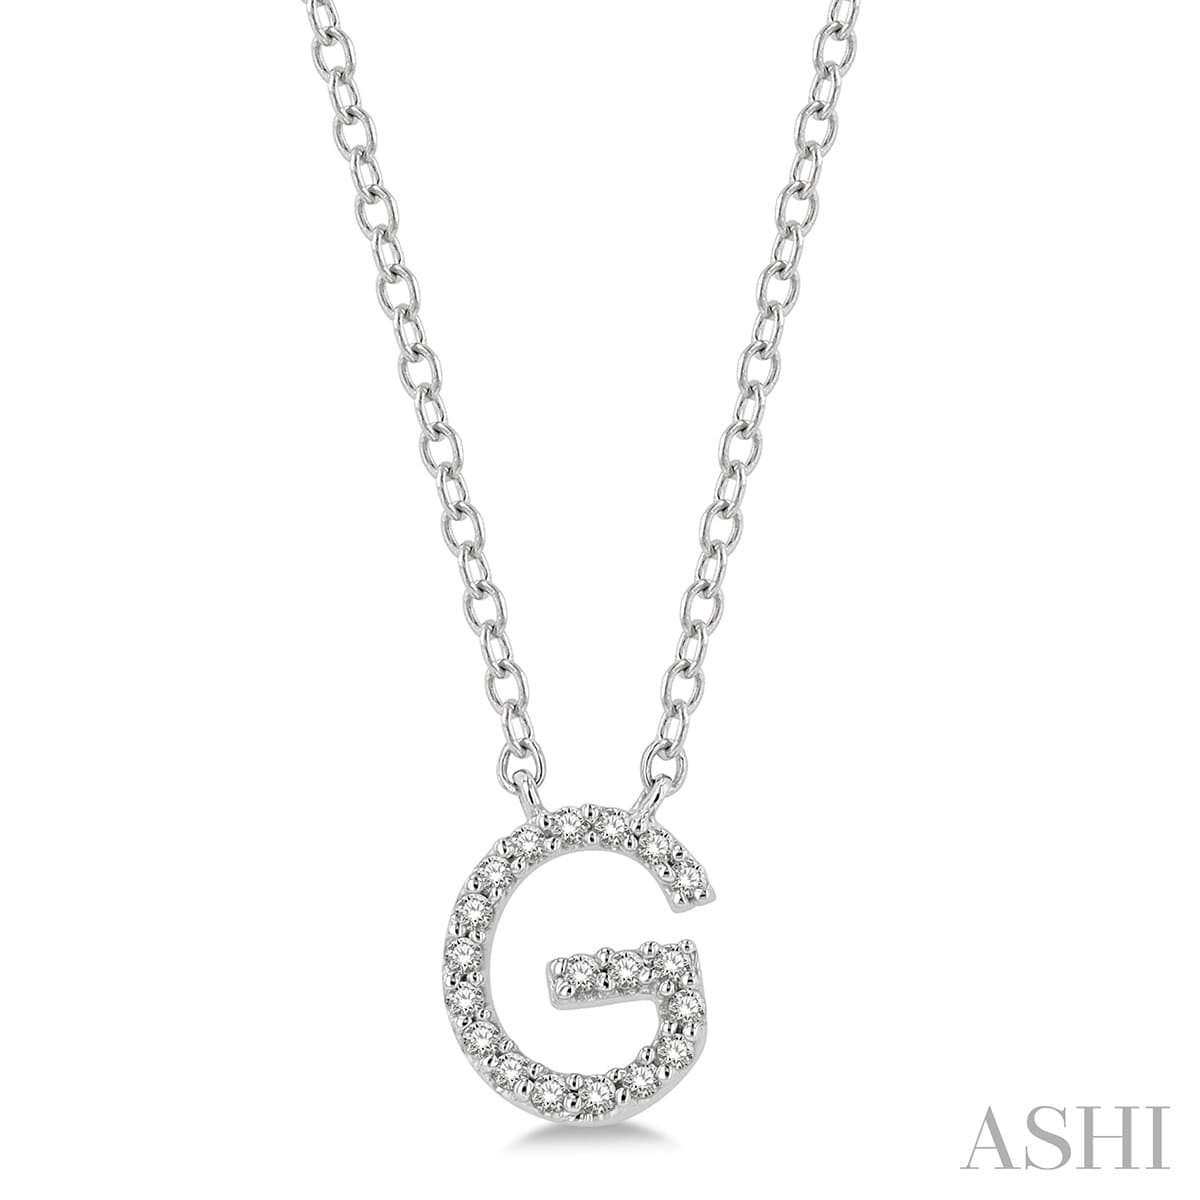 'G' Initial Diamond Pendant